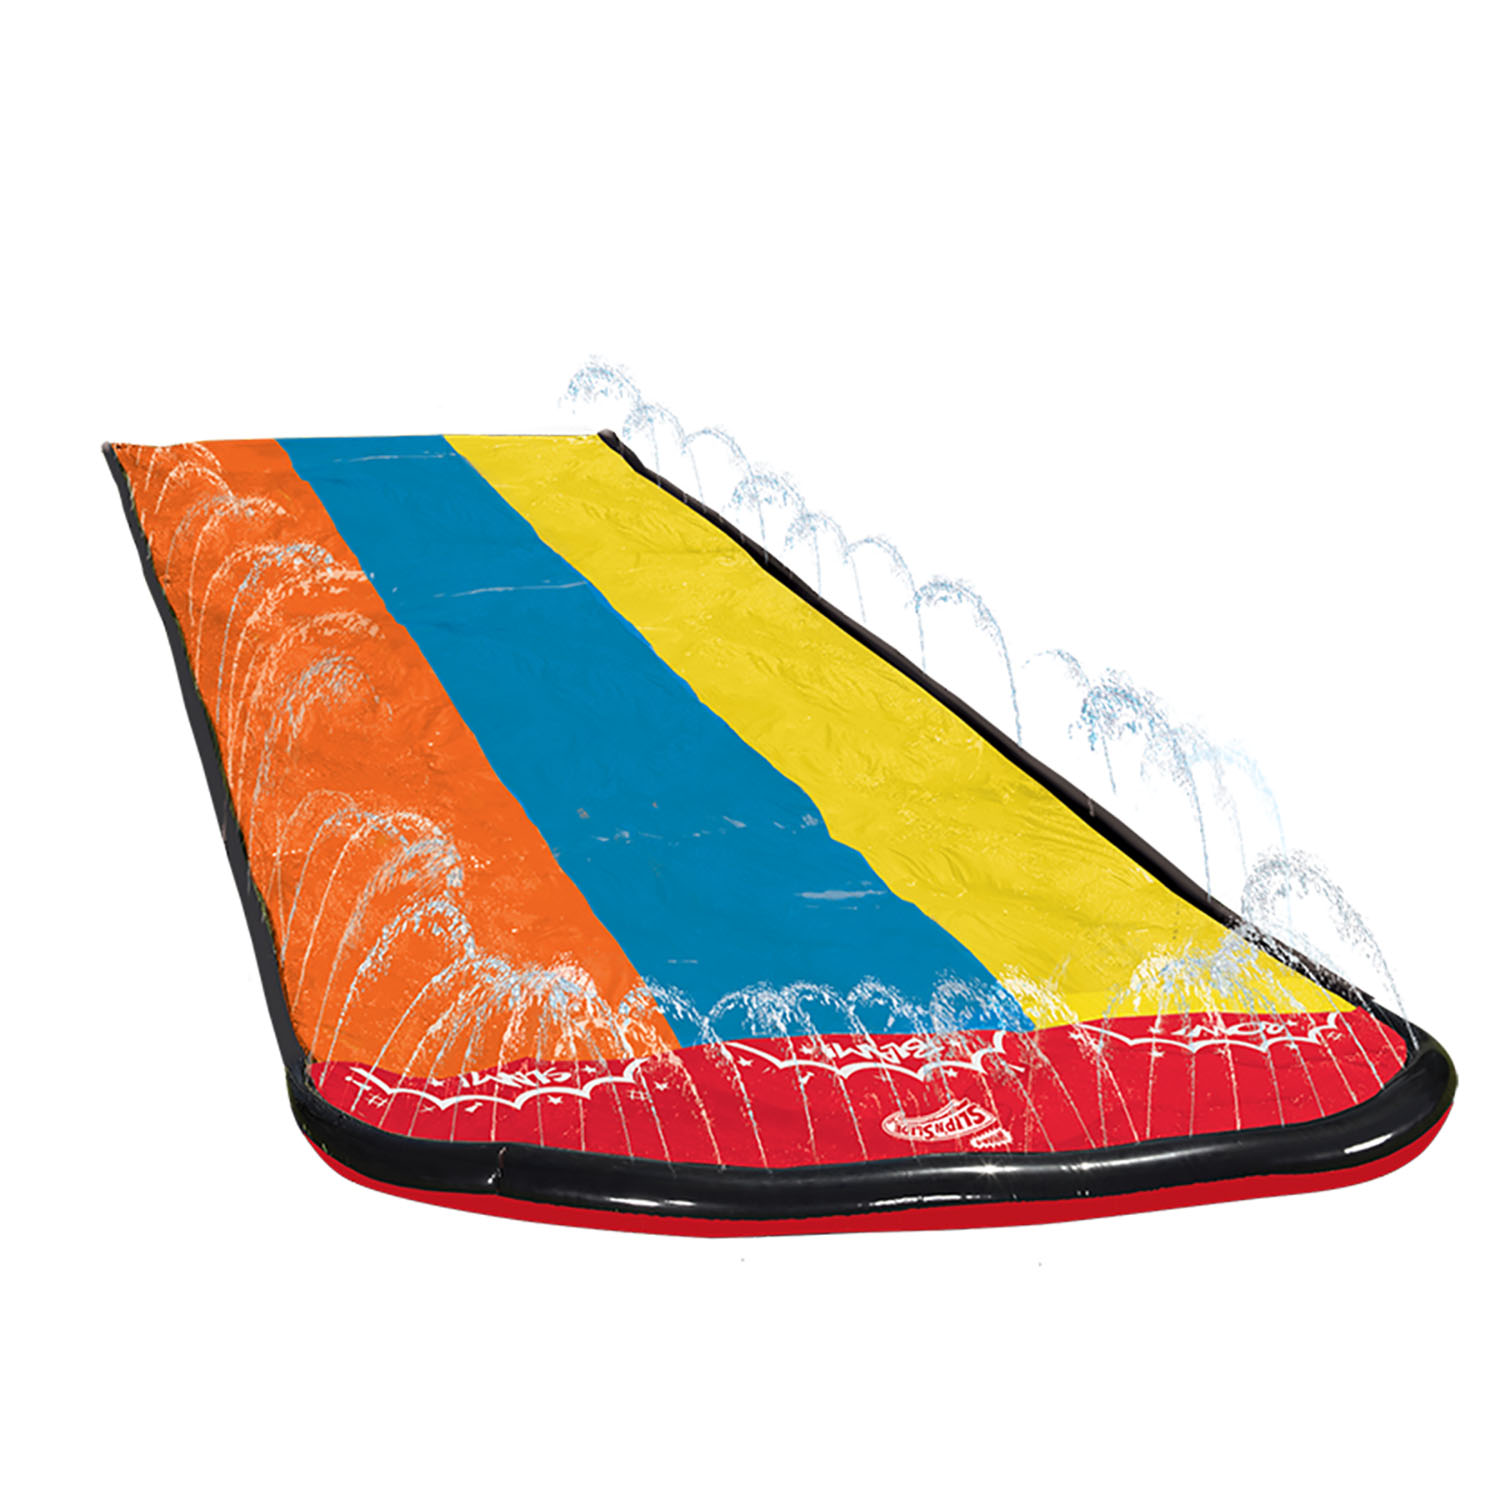 Wham-O Hydroplane 16 Foot Lawn Kid's Triple Lane Water Slide with Splash Zone - image 3 of 5